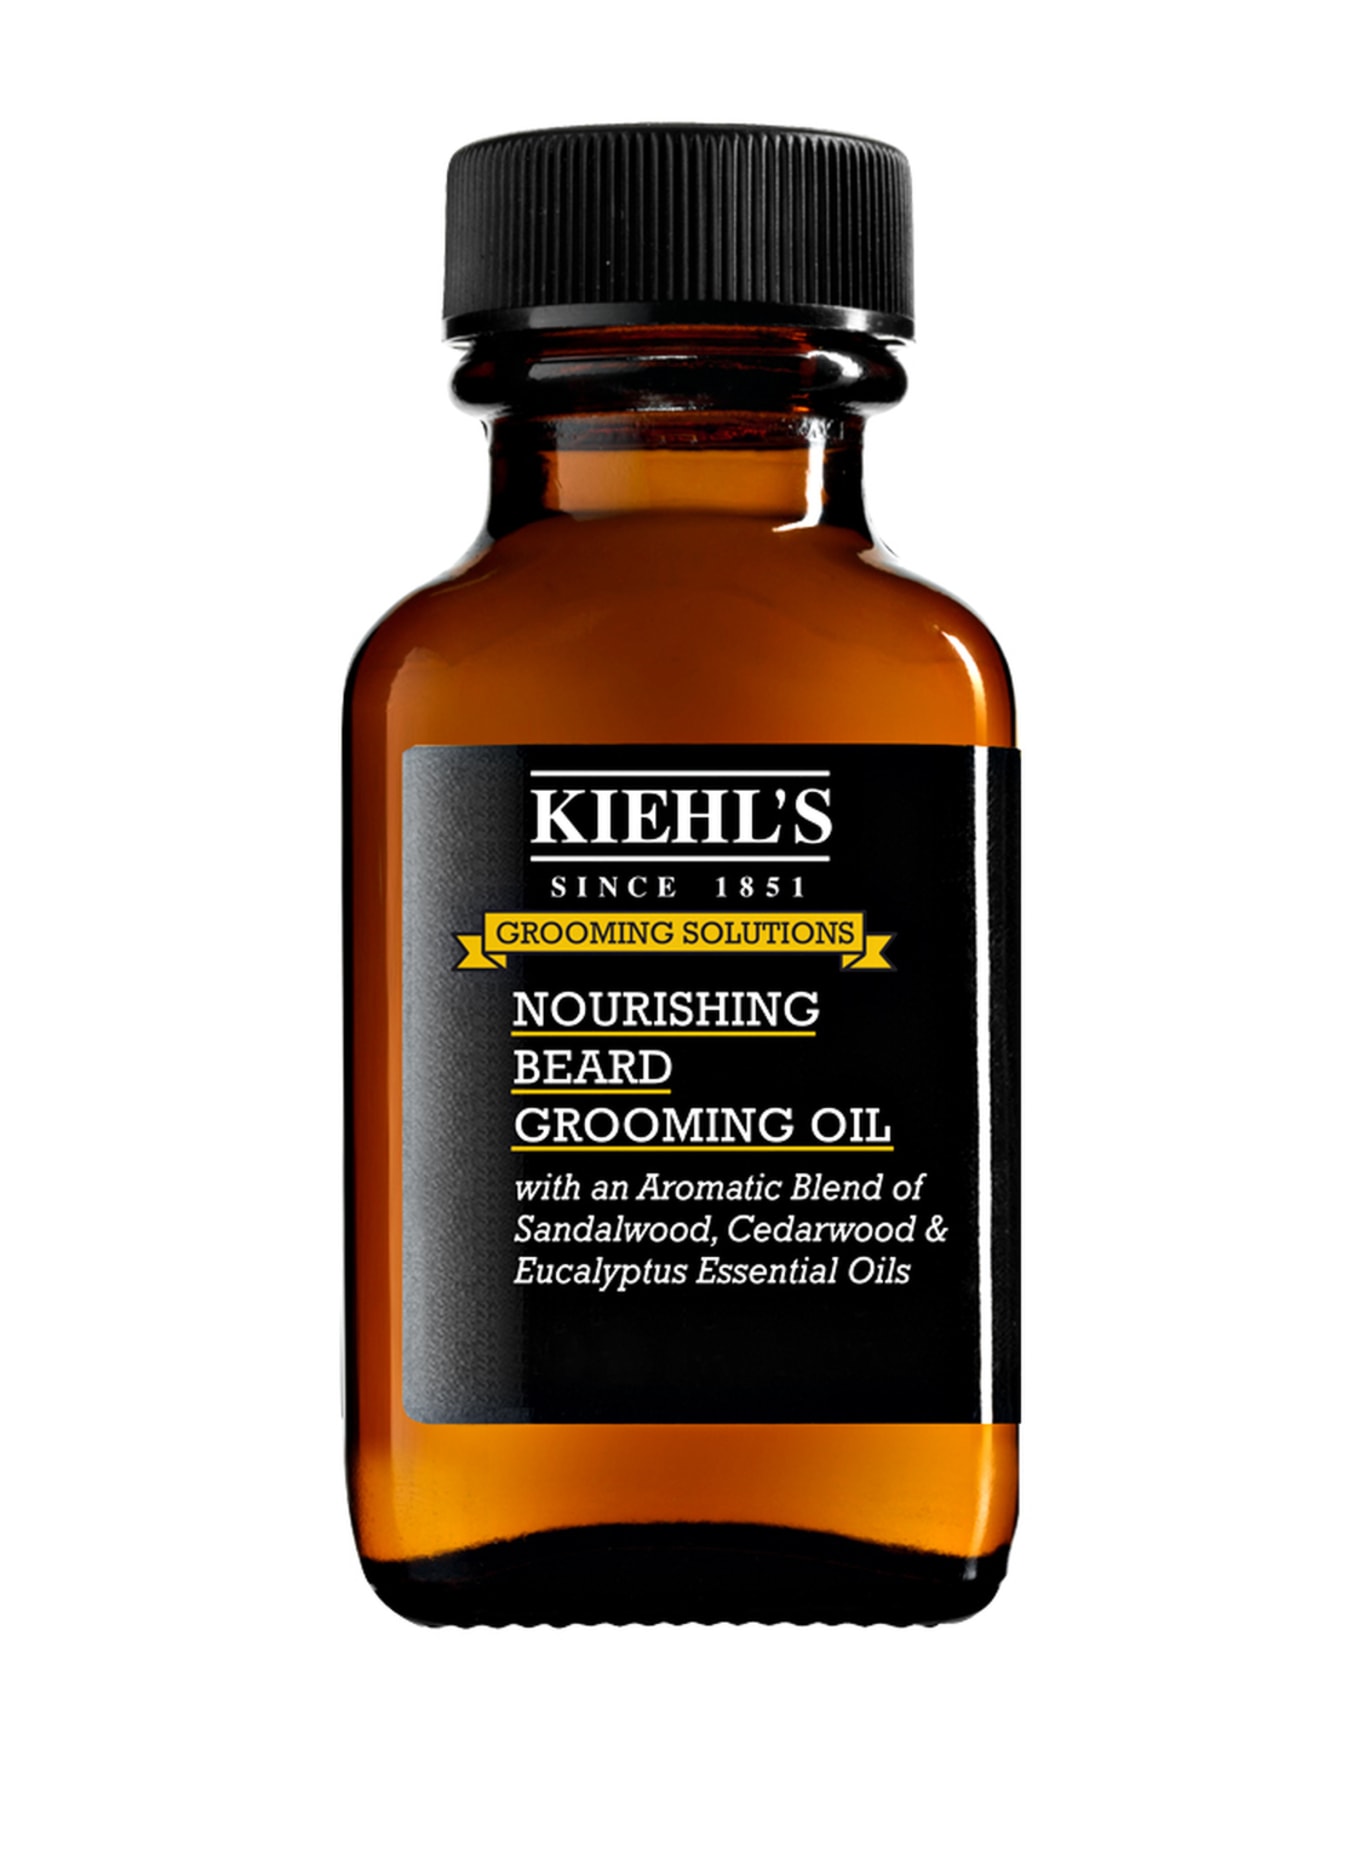 Kiehl's NOURISHING BEARD GROOMING OIL  (Obrázek 1)